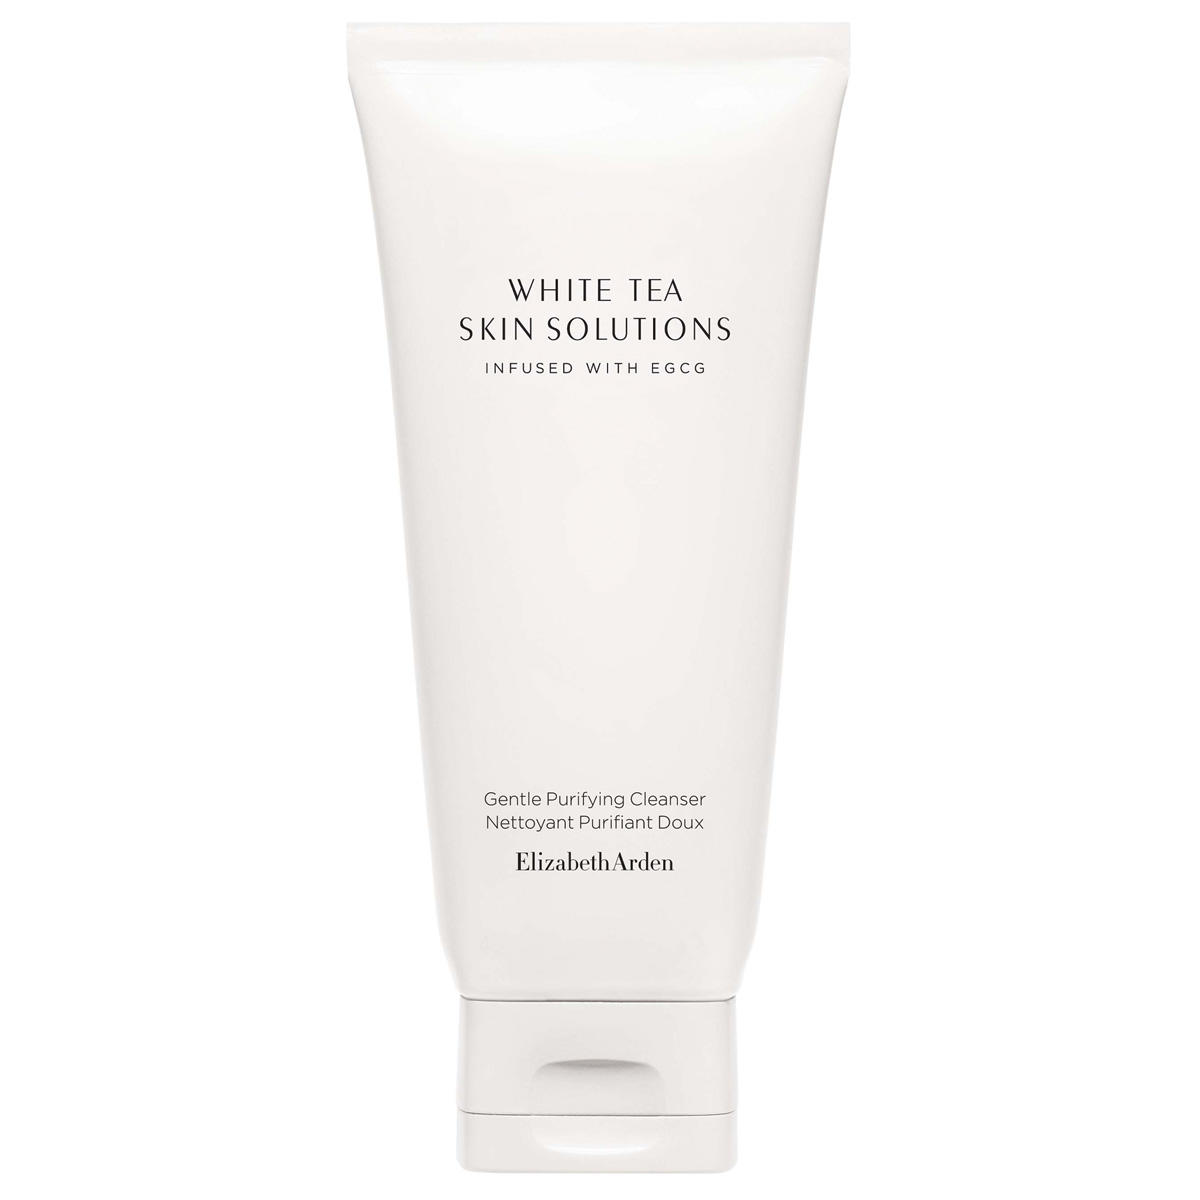 Elizabeth Arden WHITE TEA Skin Solutions Gentle Purifying Cleanser 125 ml - 1